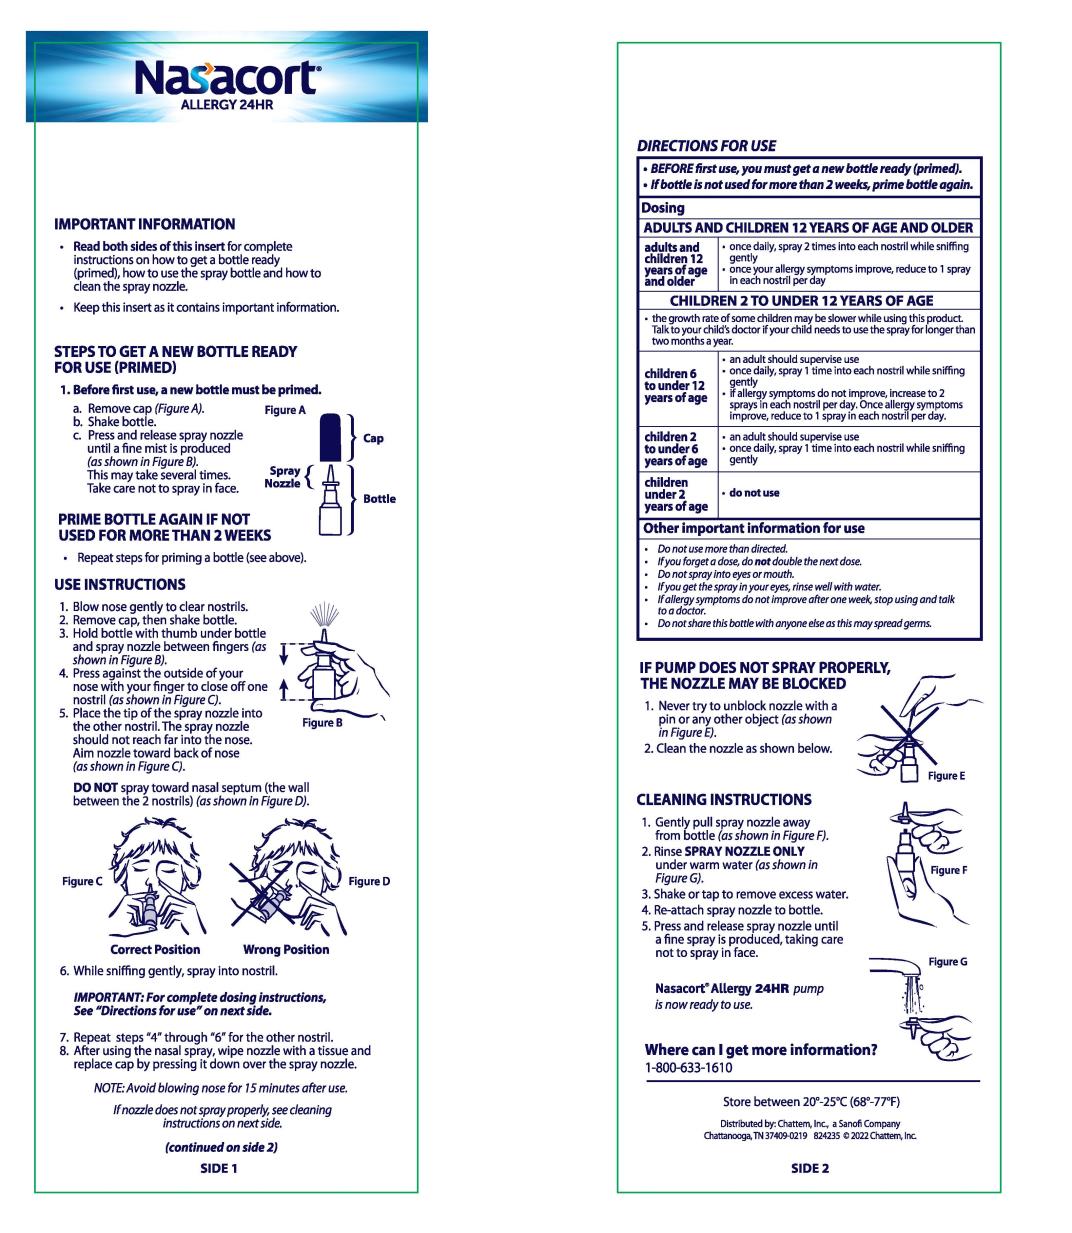 Principal Display Panel
Nasacort Allergy 24HR
Multi-Symptom
Nasal Allergy Spray
Insert
